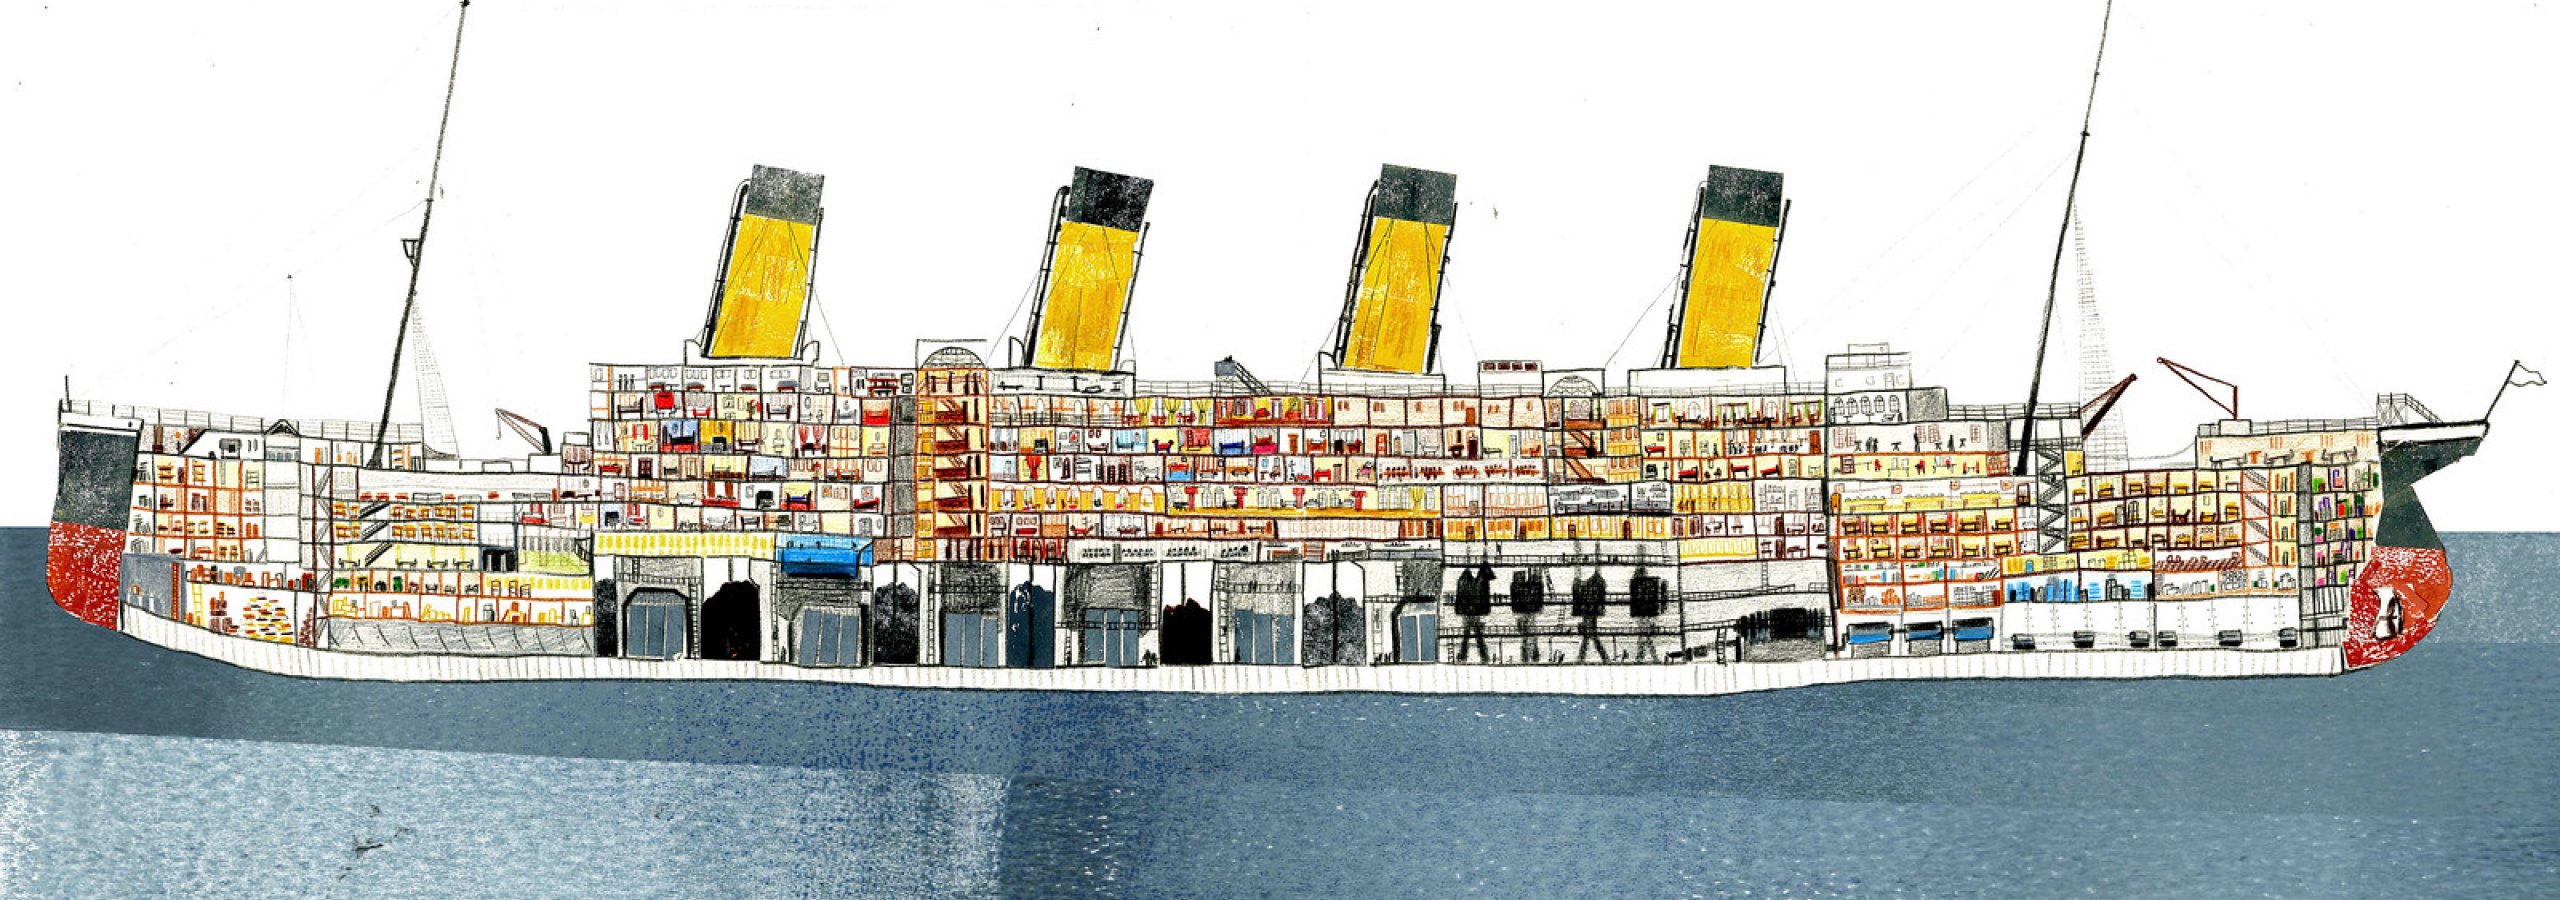 Illustration of a ship